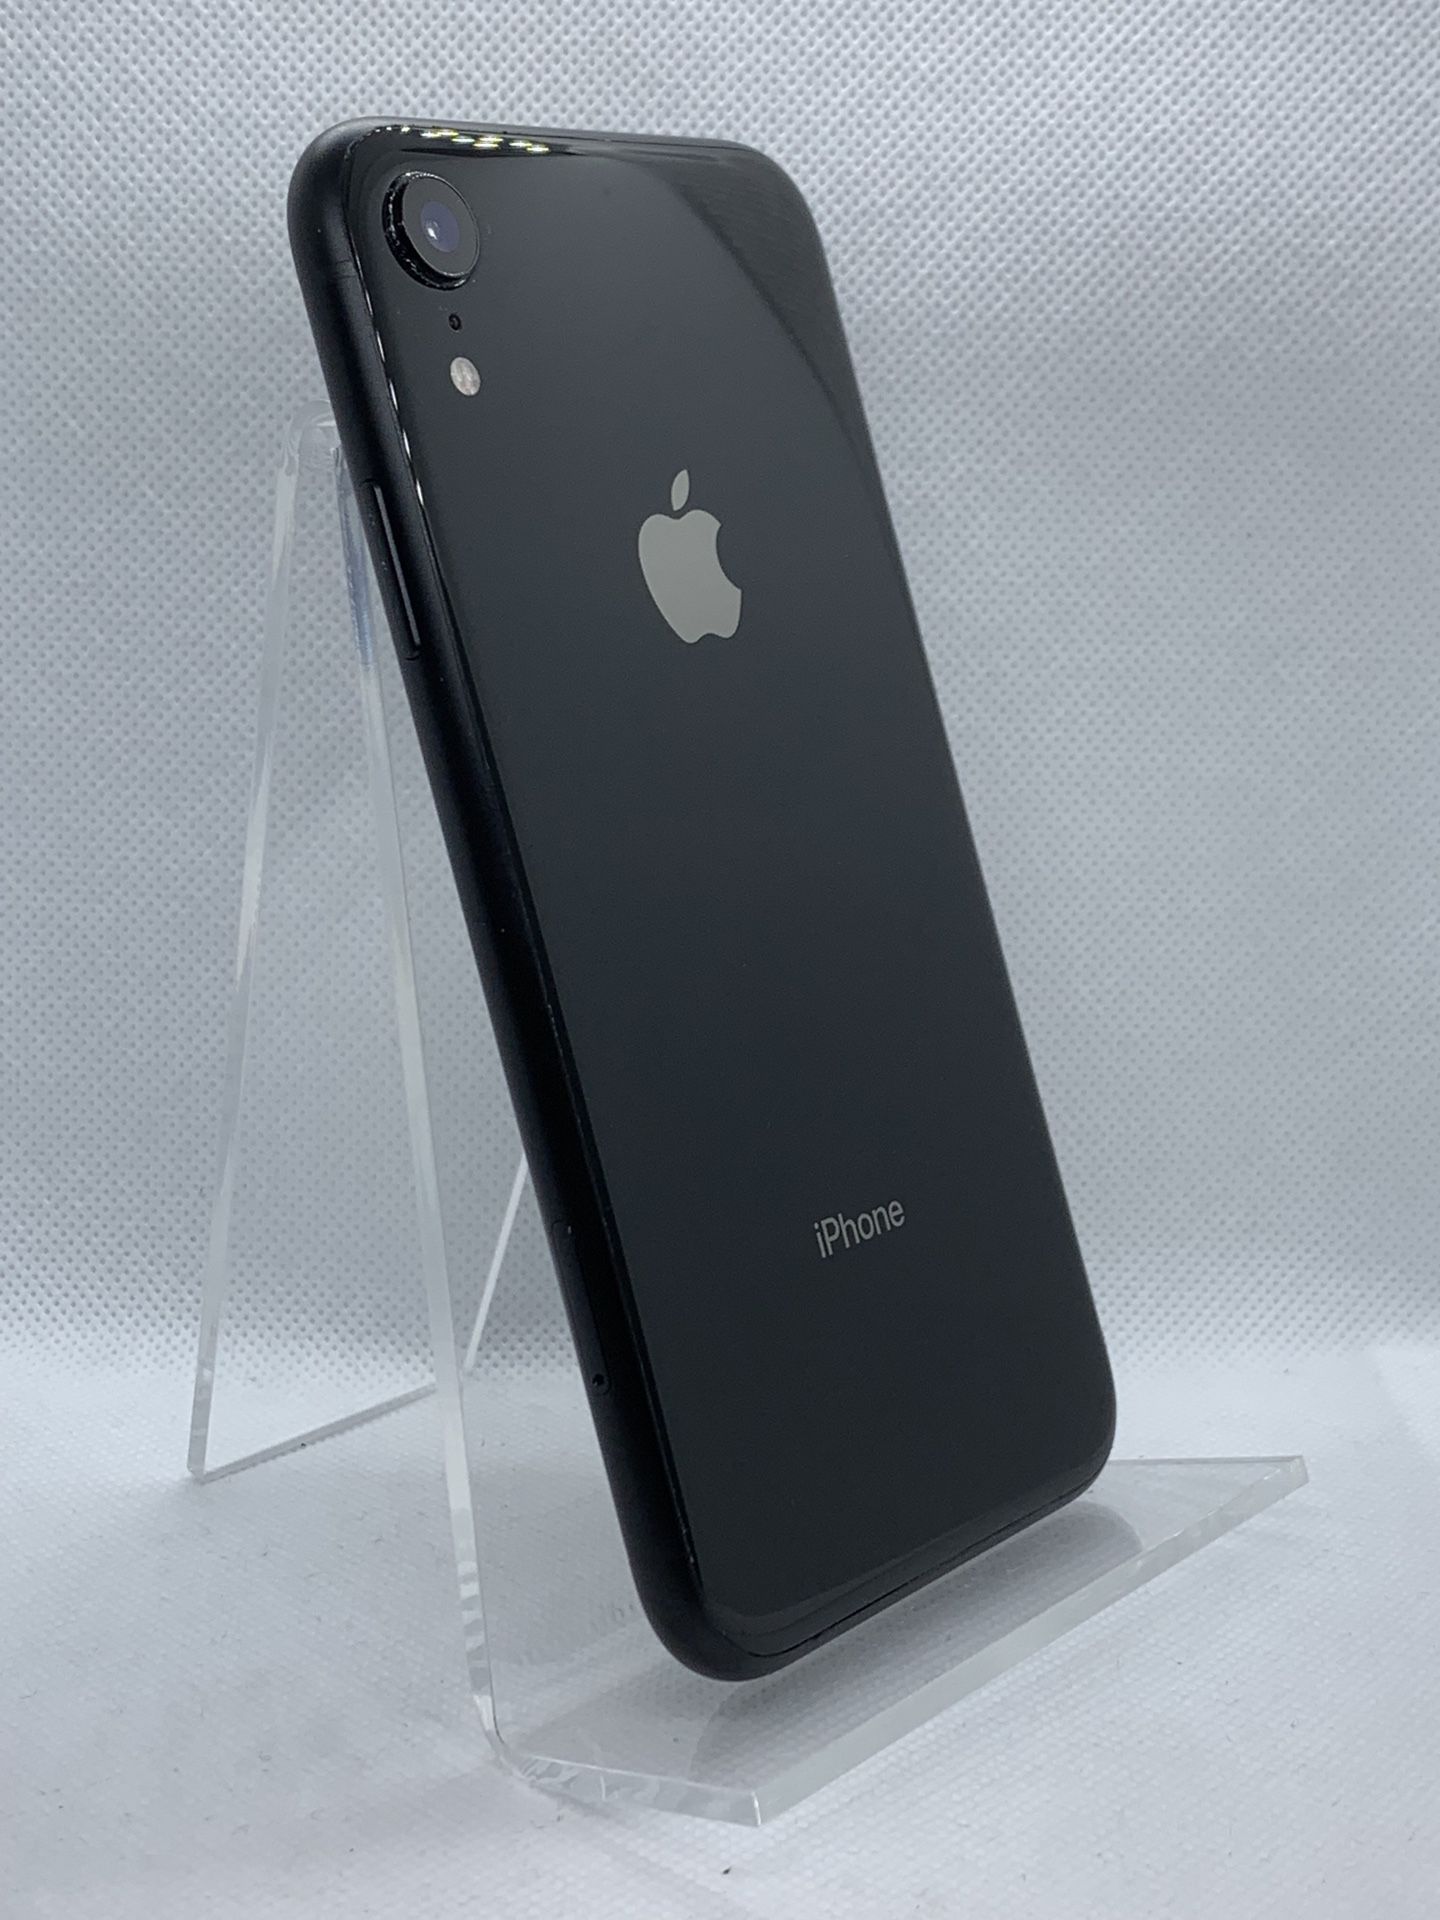 Apple iPhone XR 64GB Space Grey Factory Unlocked 